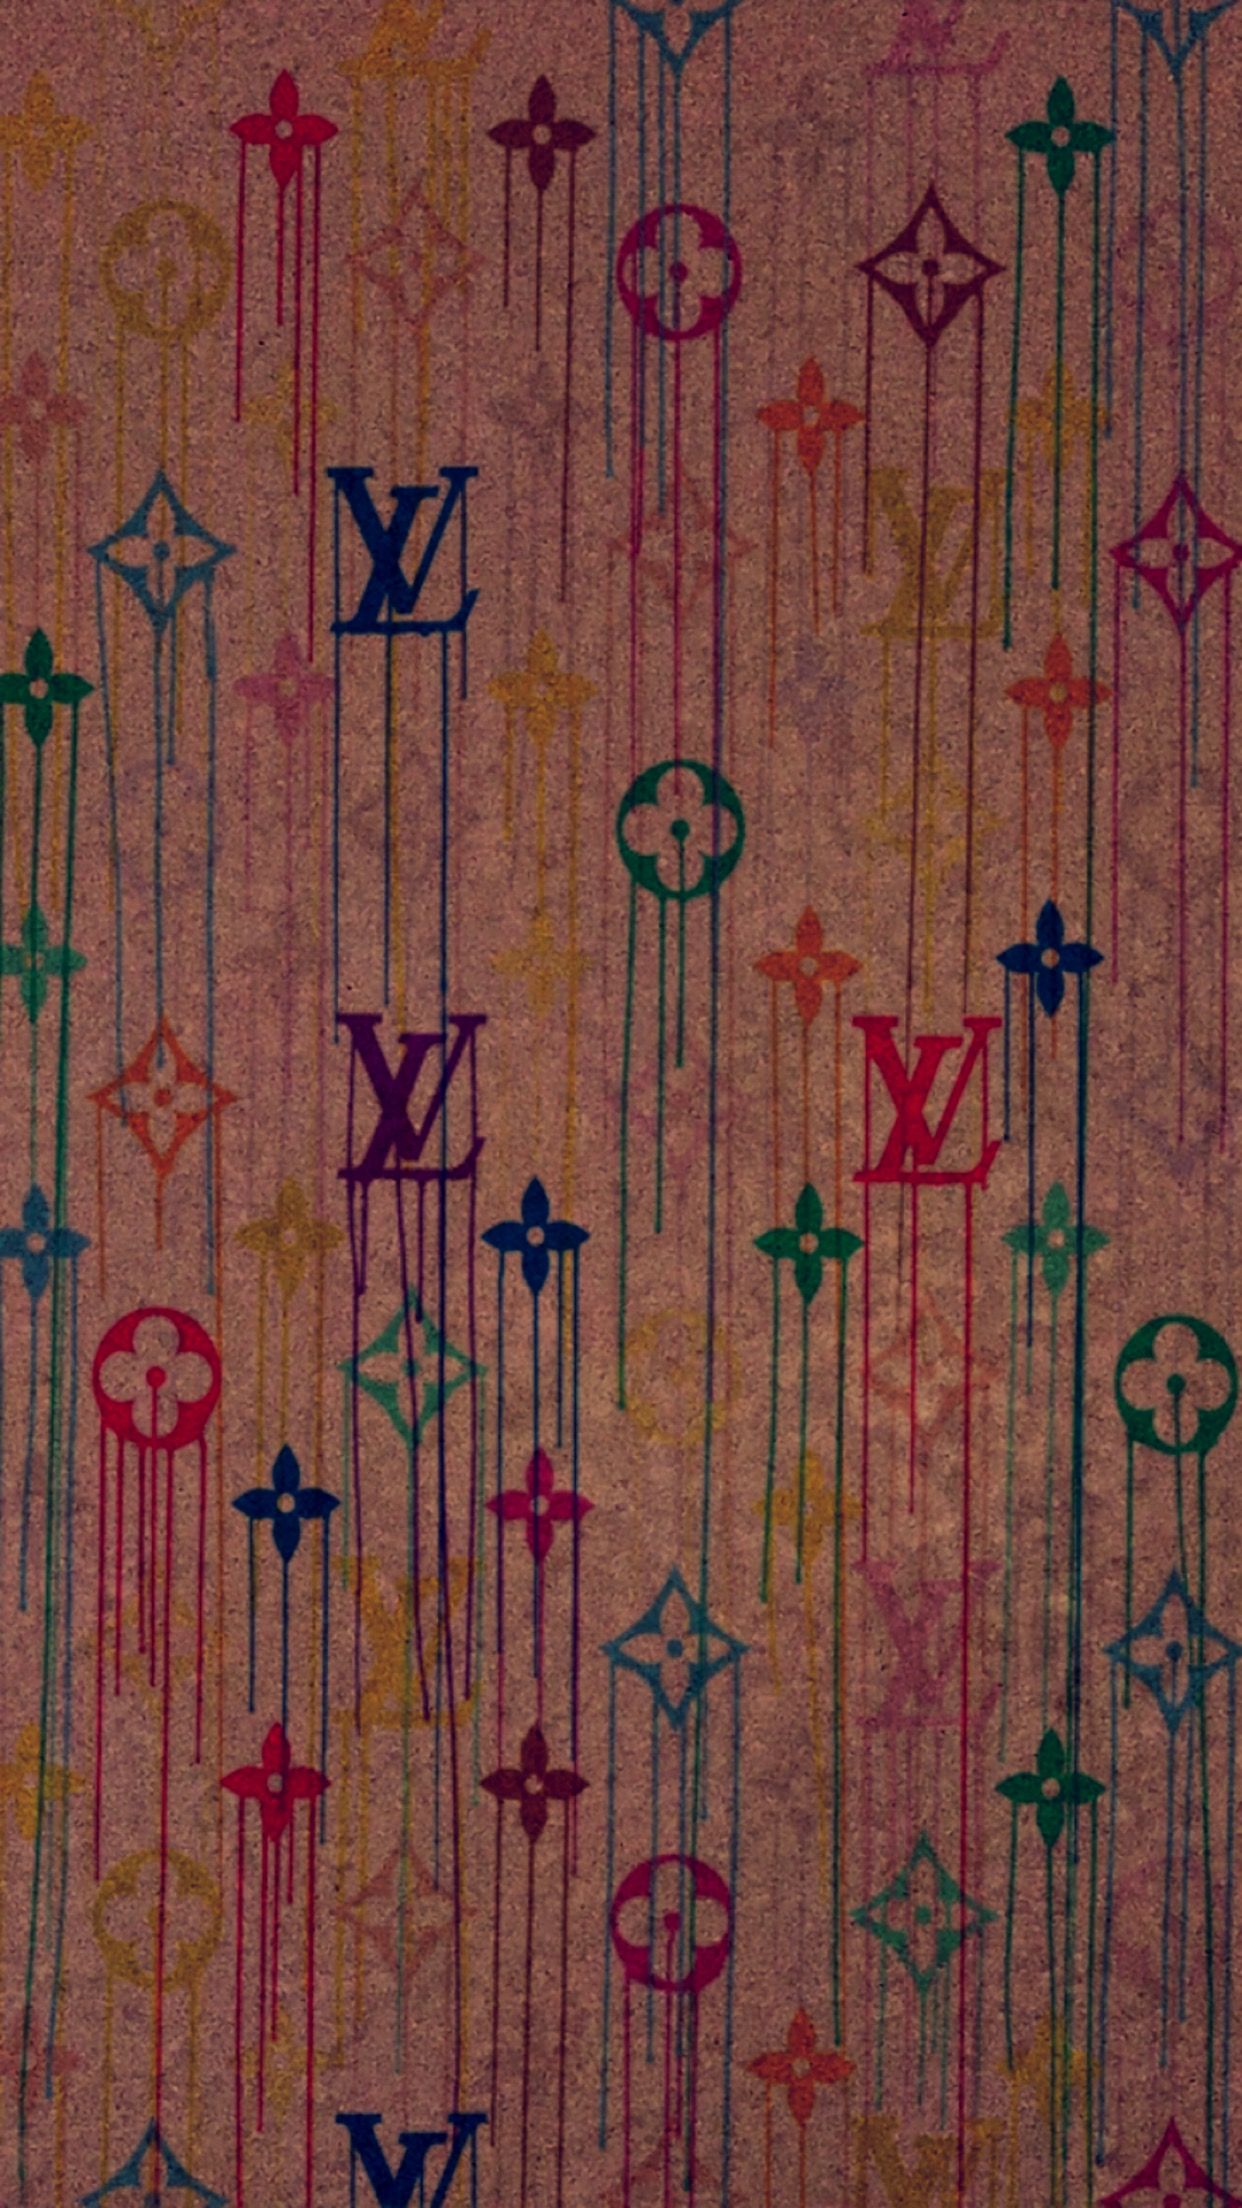 Pink Louis Vuitton Wallpaper - KoLPaPer - Awesome Free HD Wallpapers